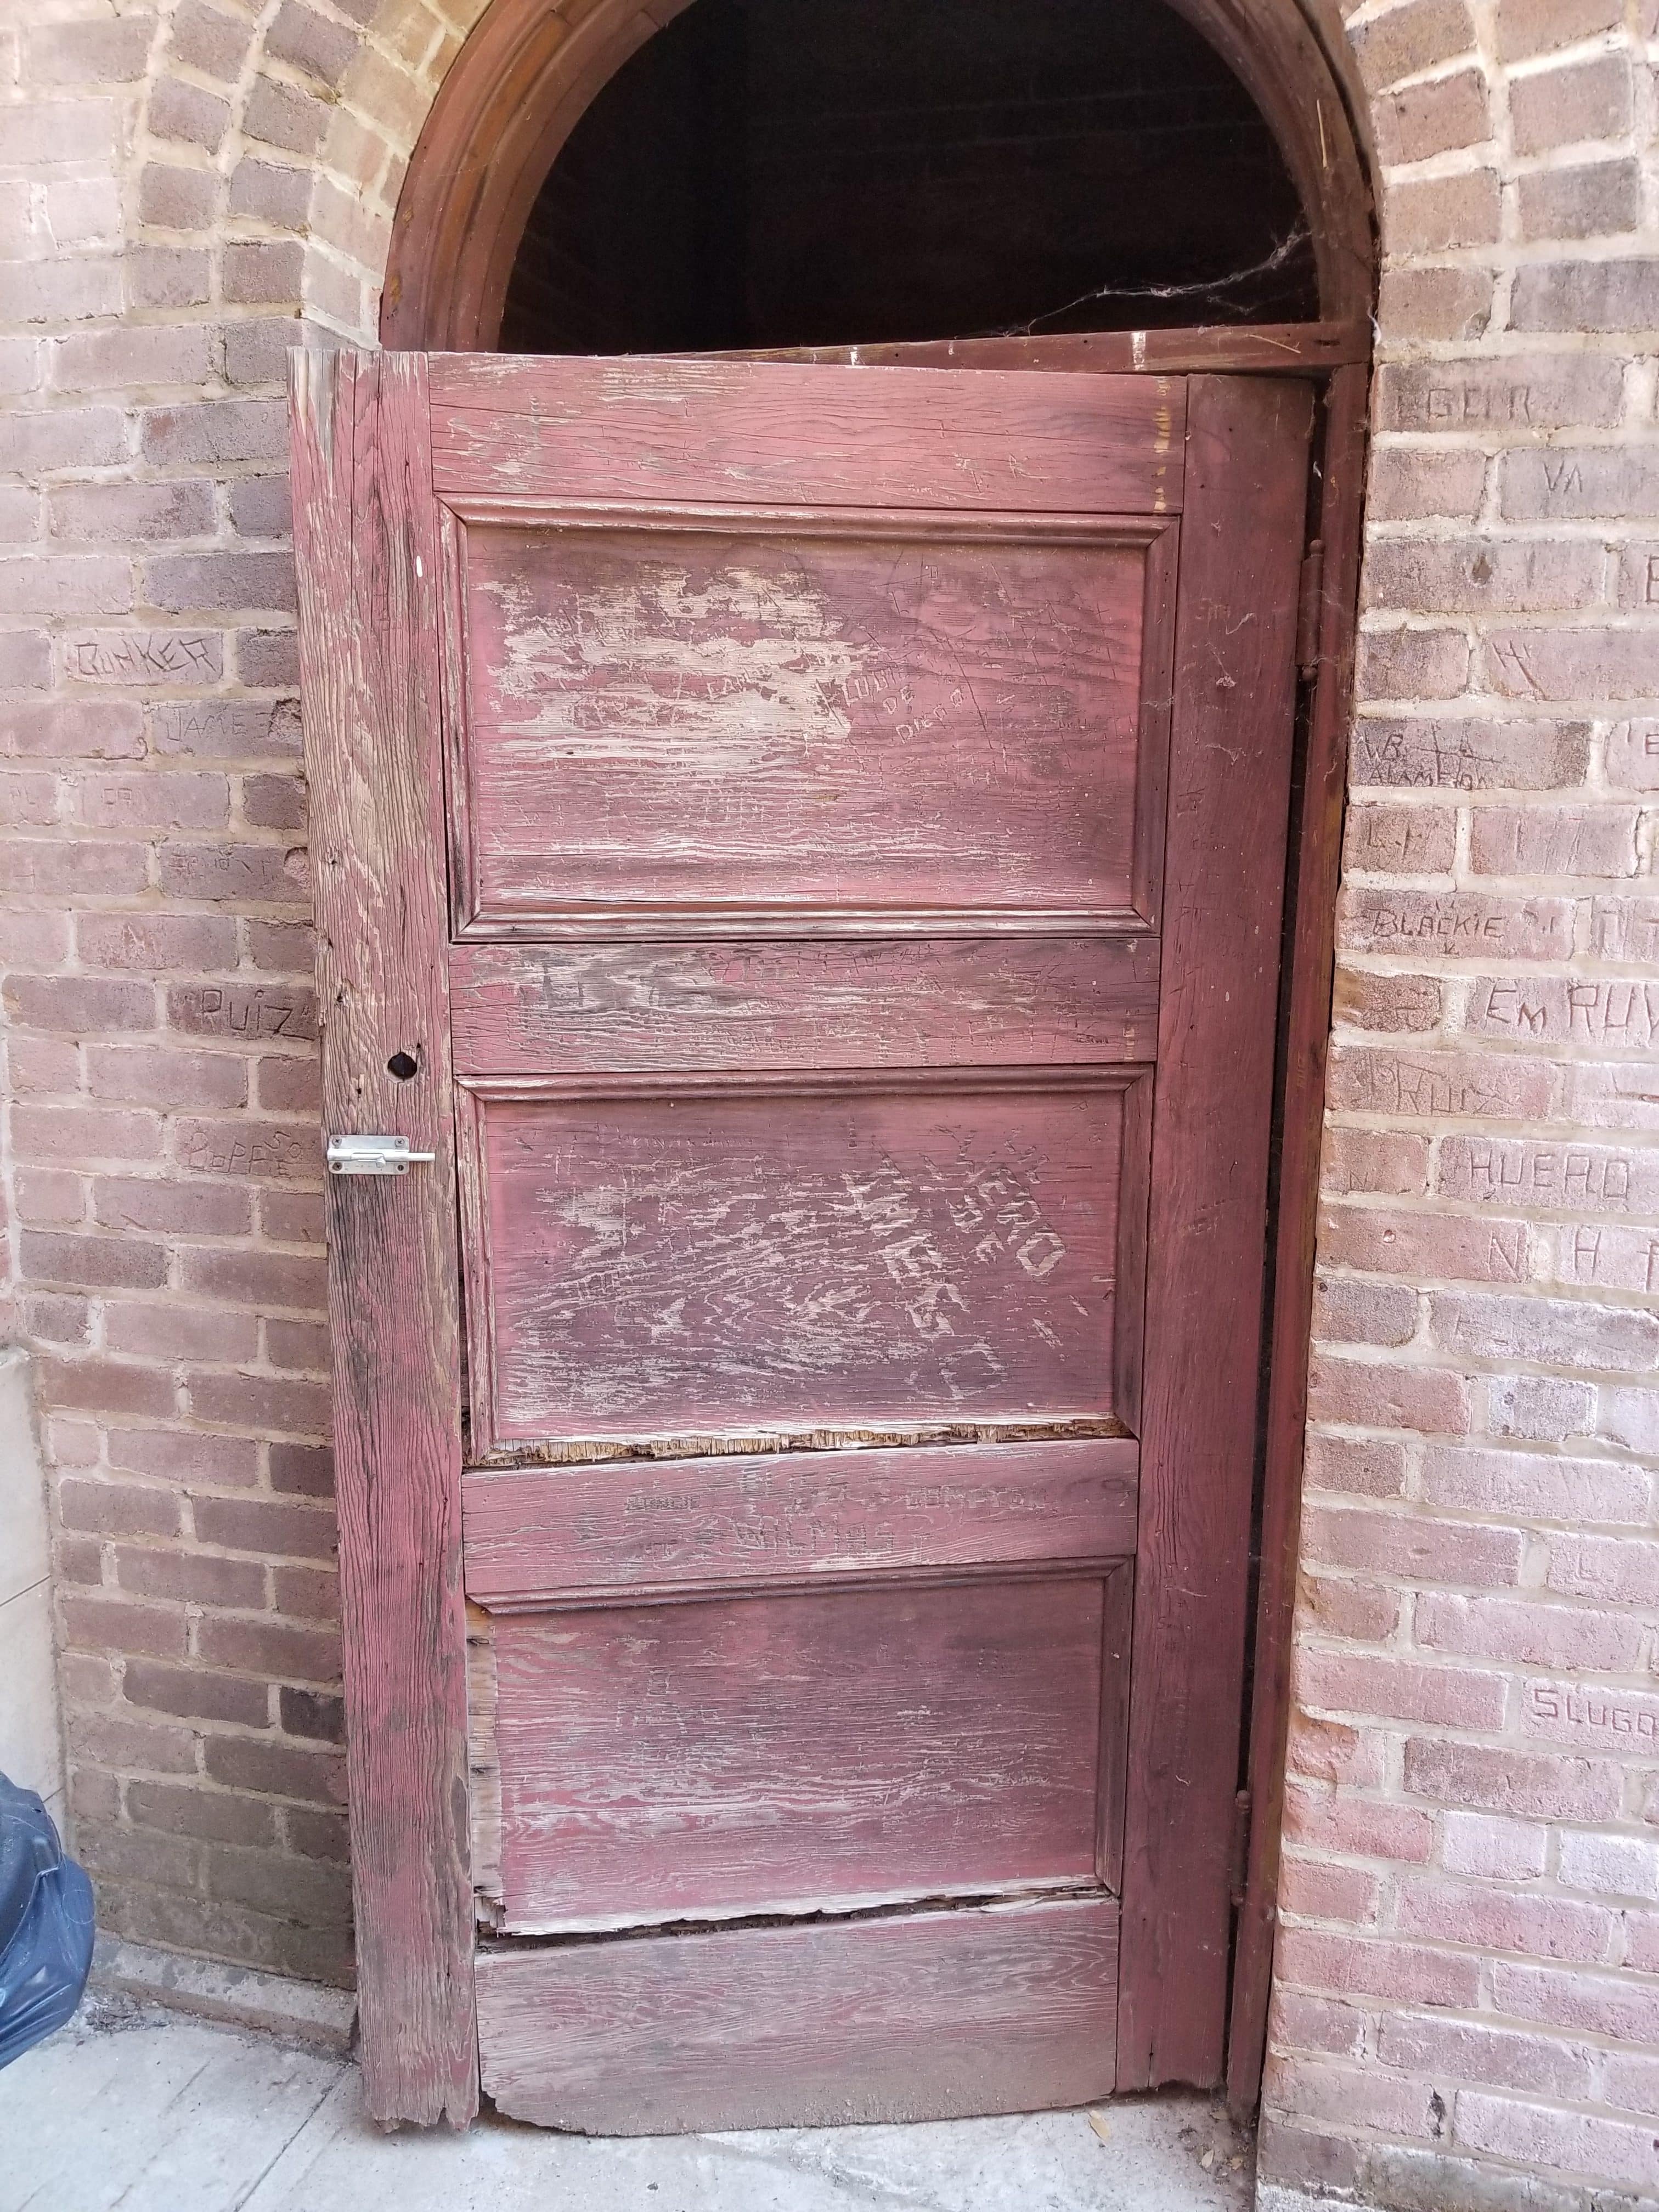 faded and peeling red wooden door in brick wall